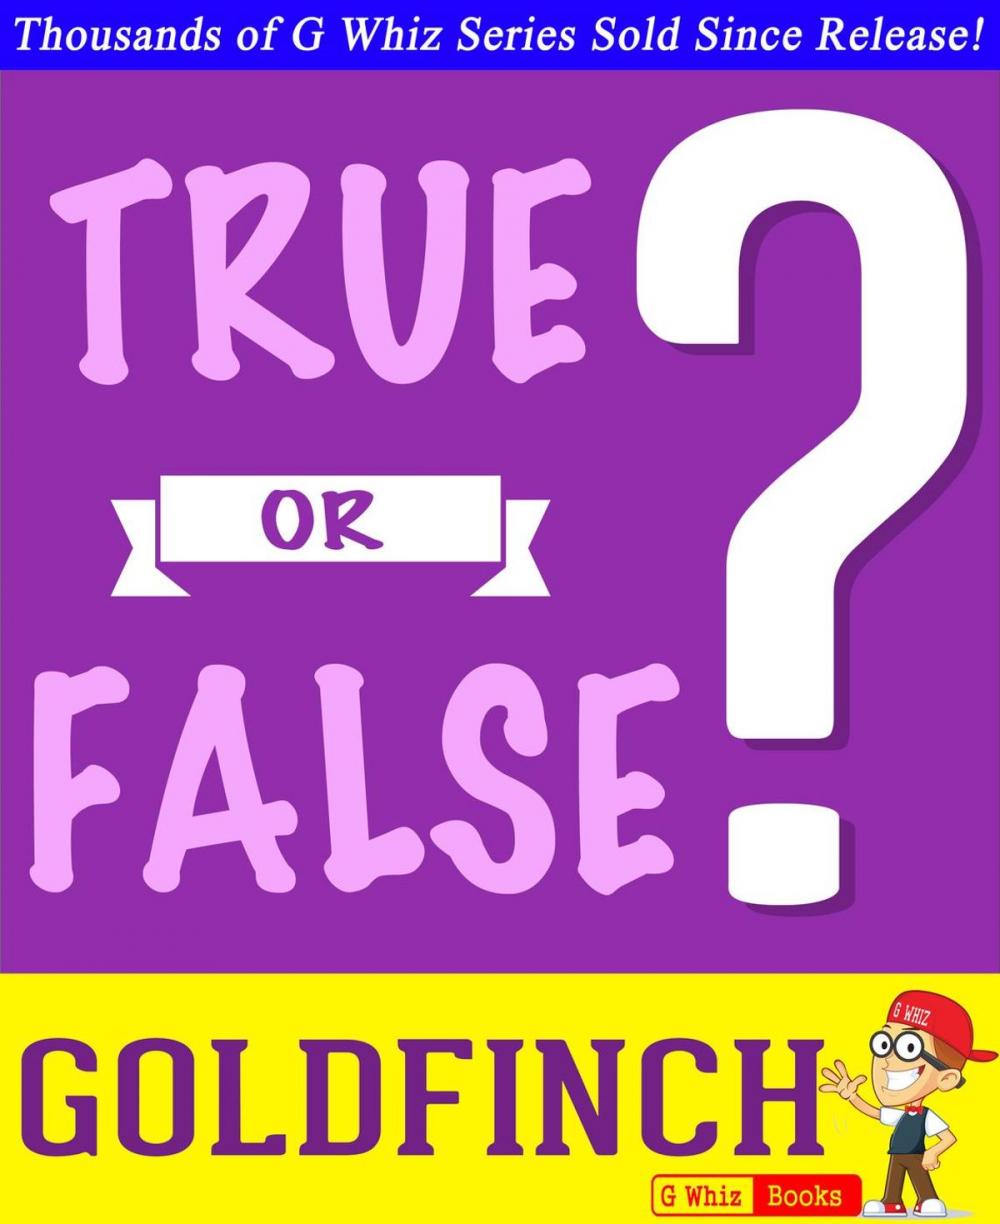 Big bigCover of The Goldfinch - True or False?